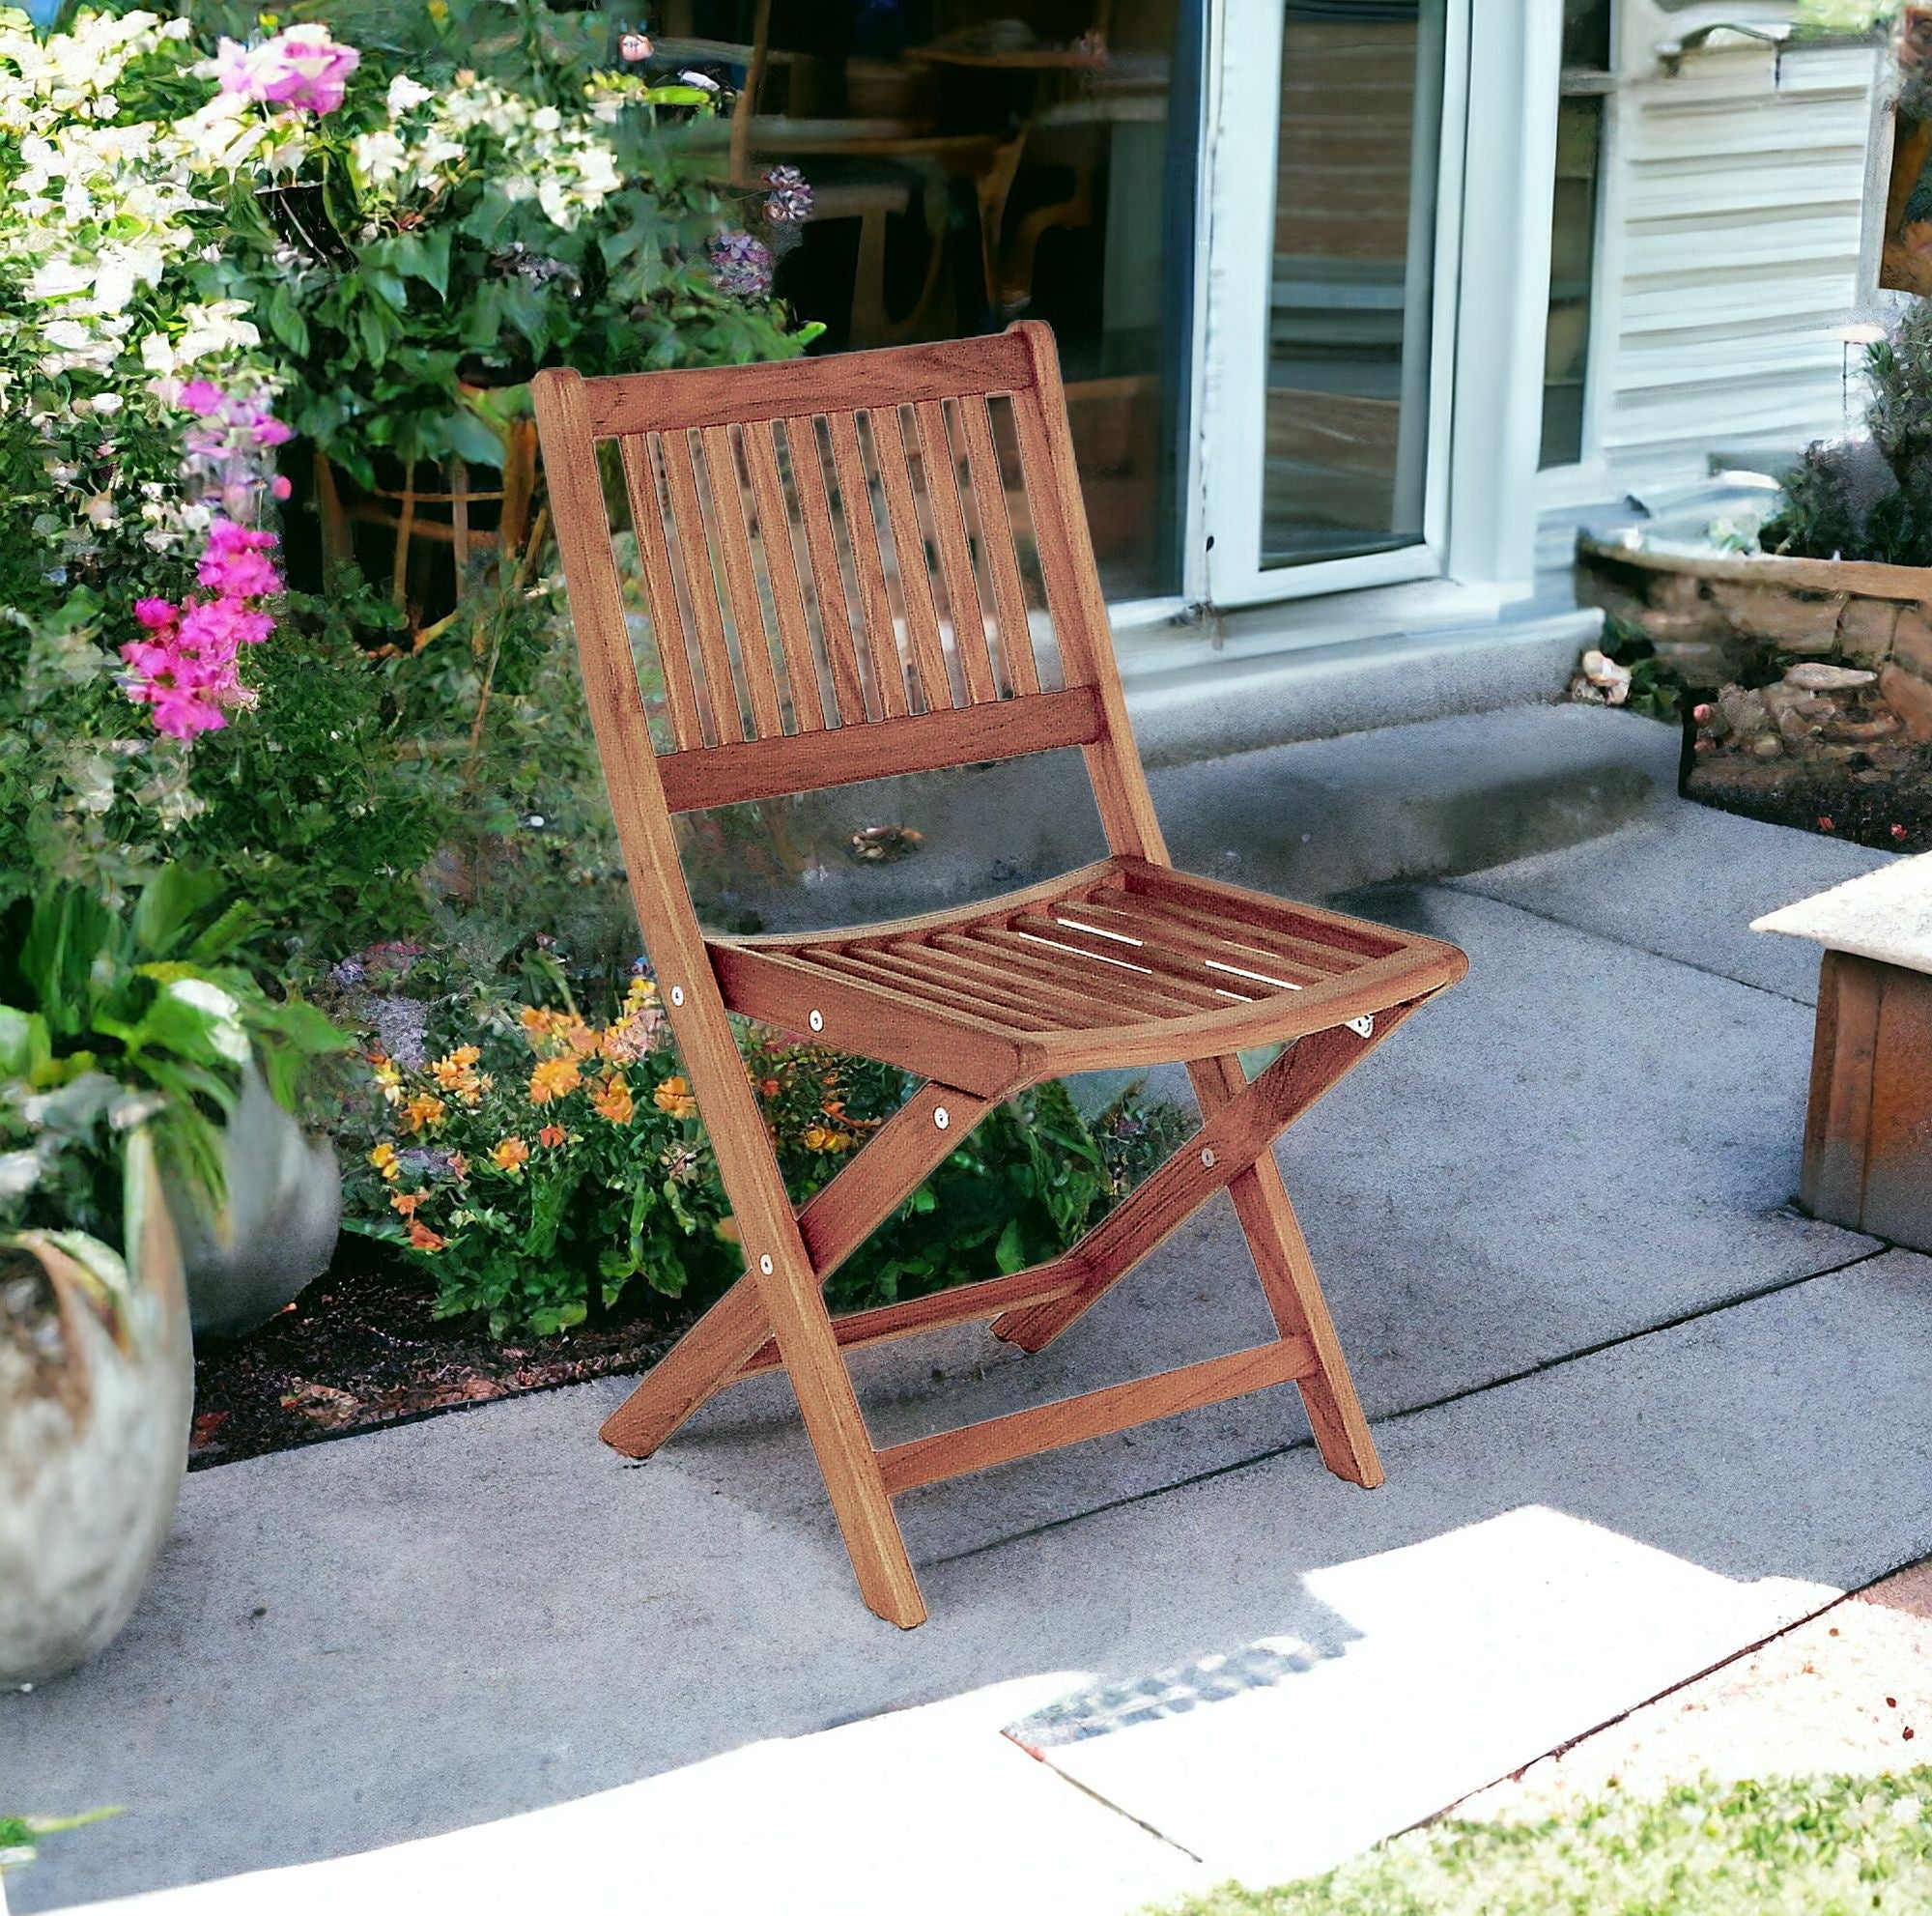 Brown Solid Wood Deck Chair